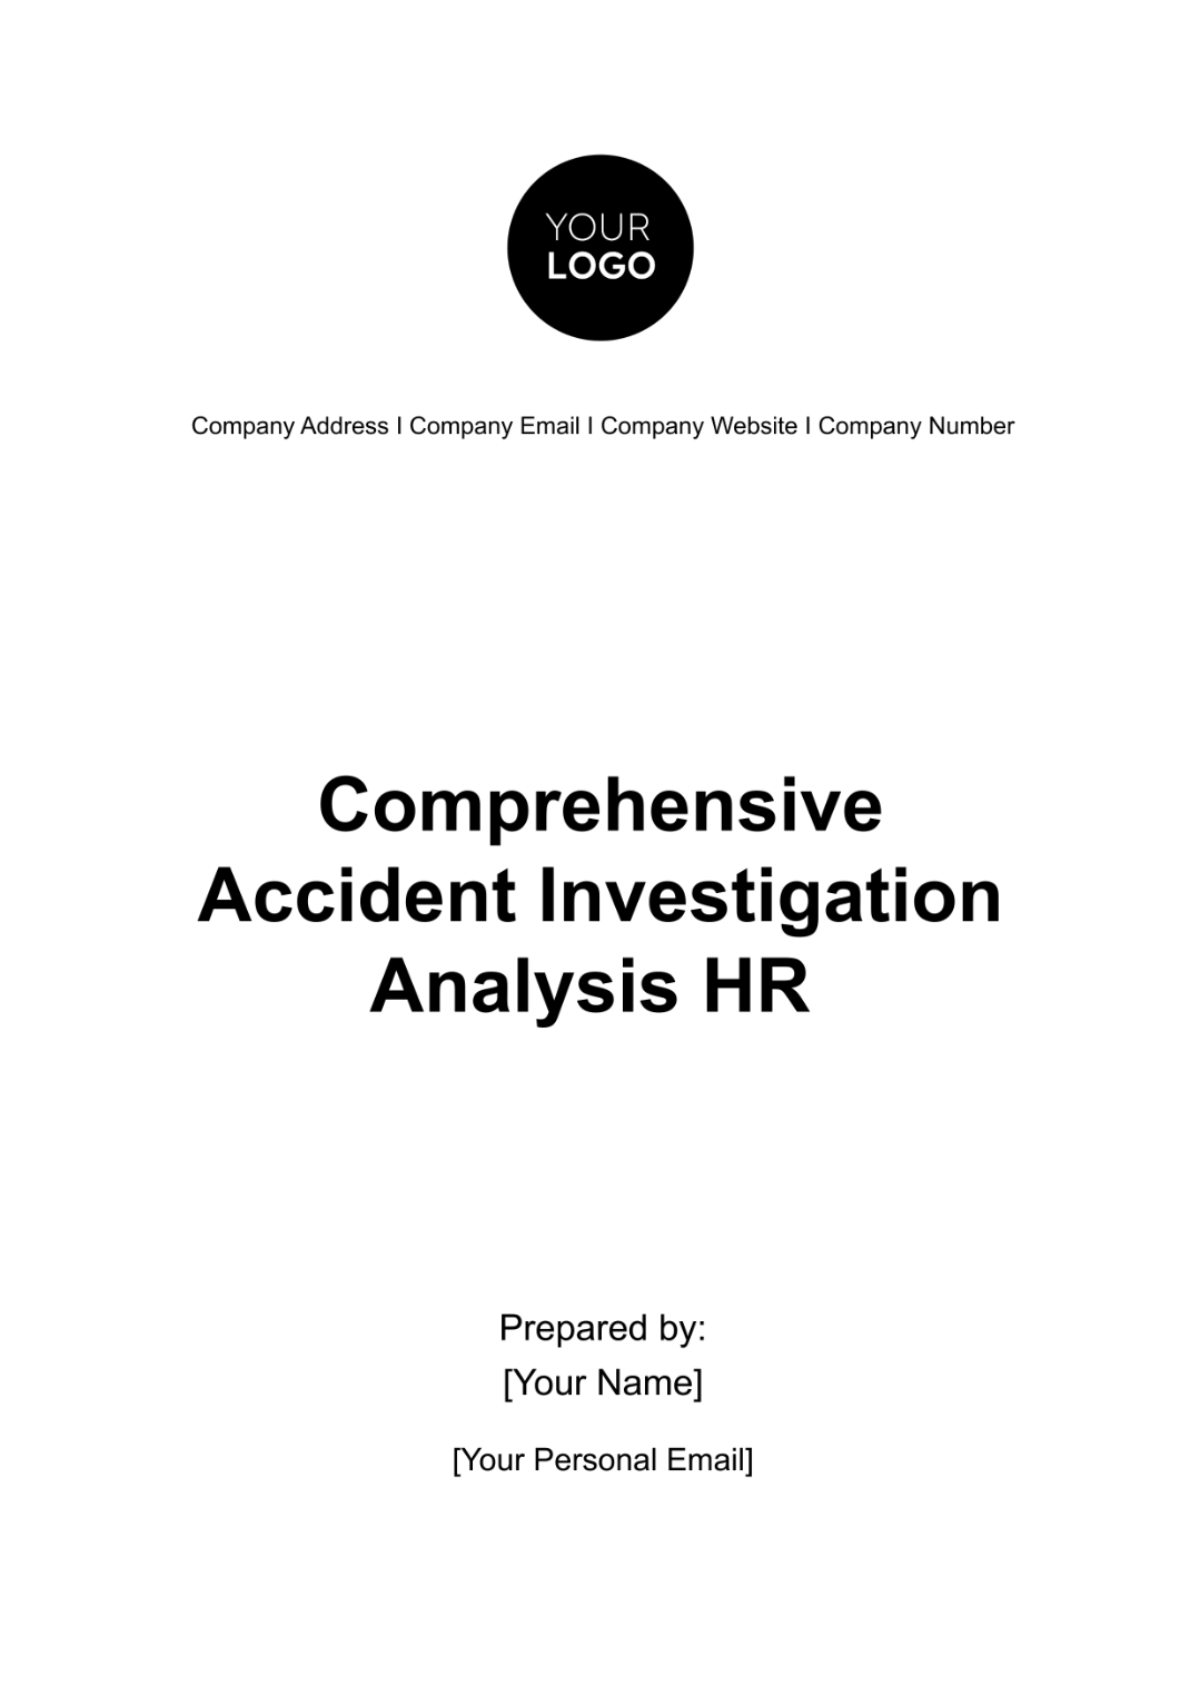 Comprehensive Accident Investigation Analysis HR Template